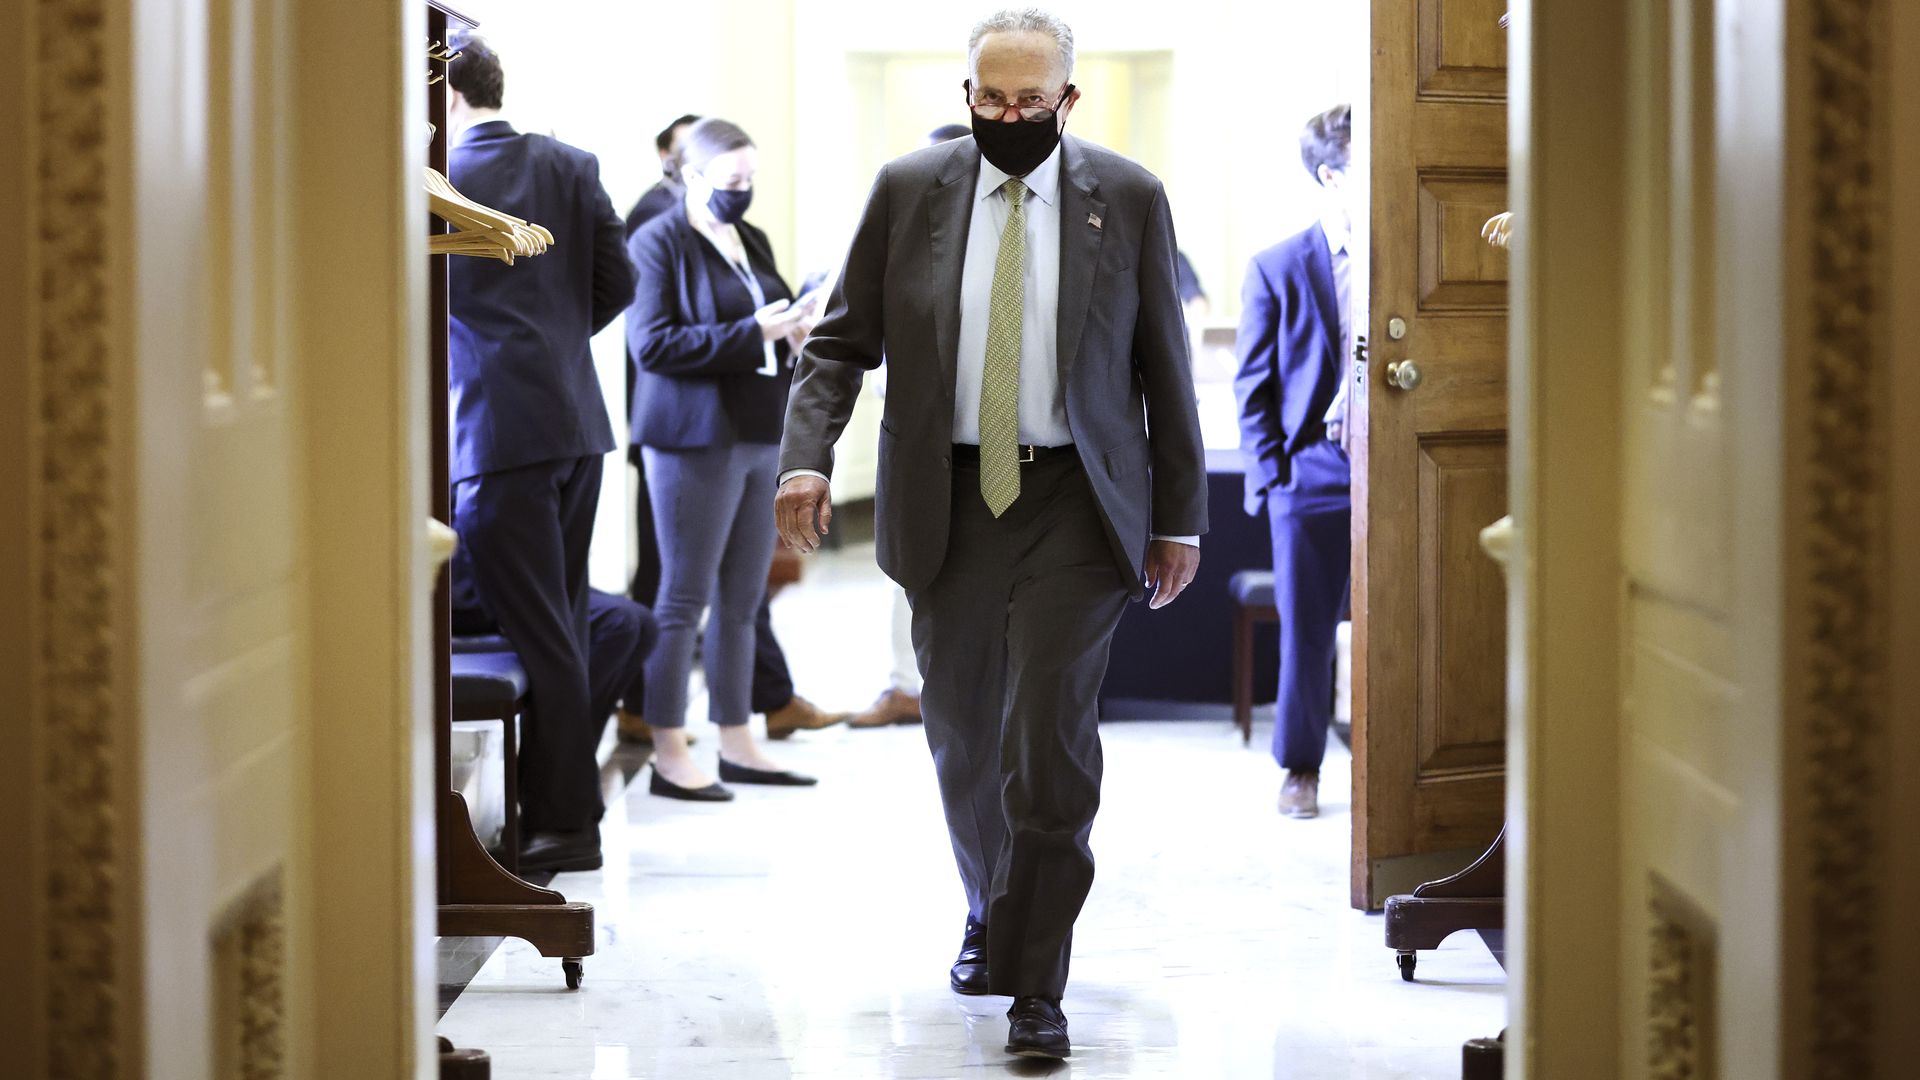 Senate Majority Leader Chuck Schumer walking through the Capitol building on Sept. 30.